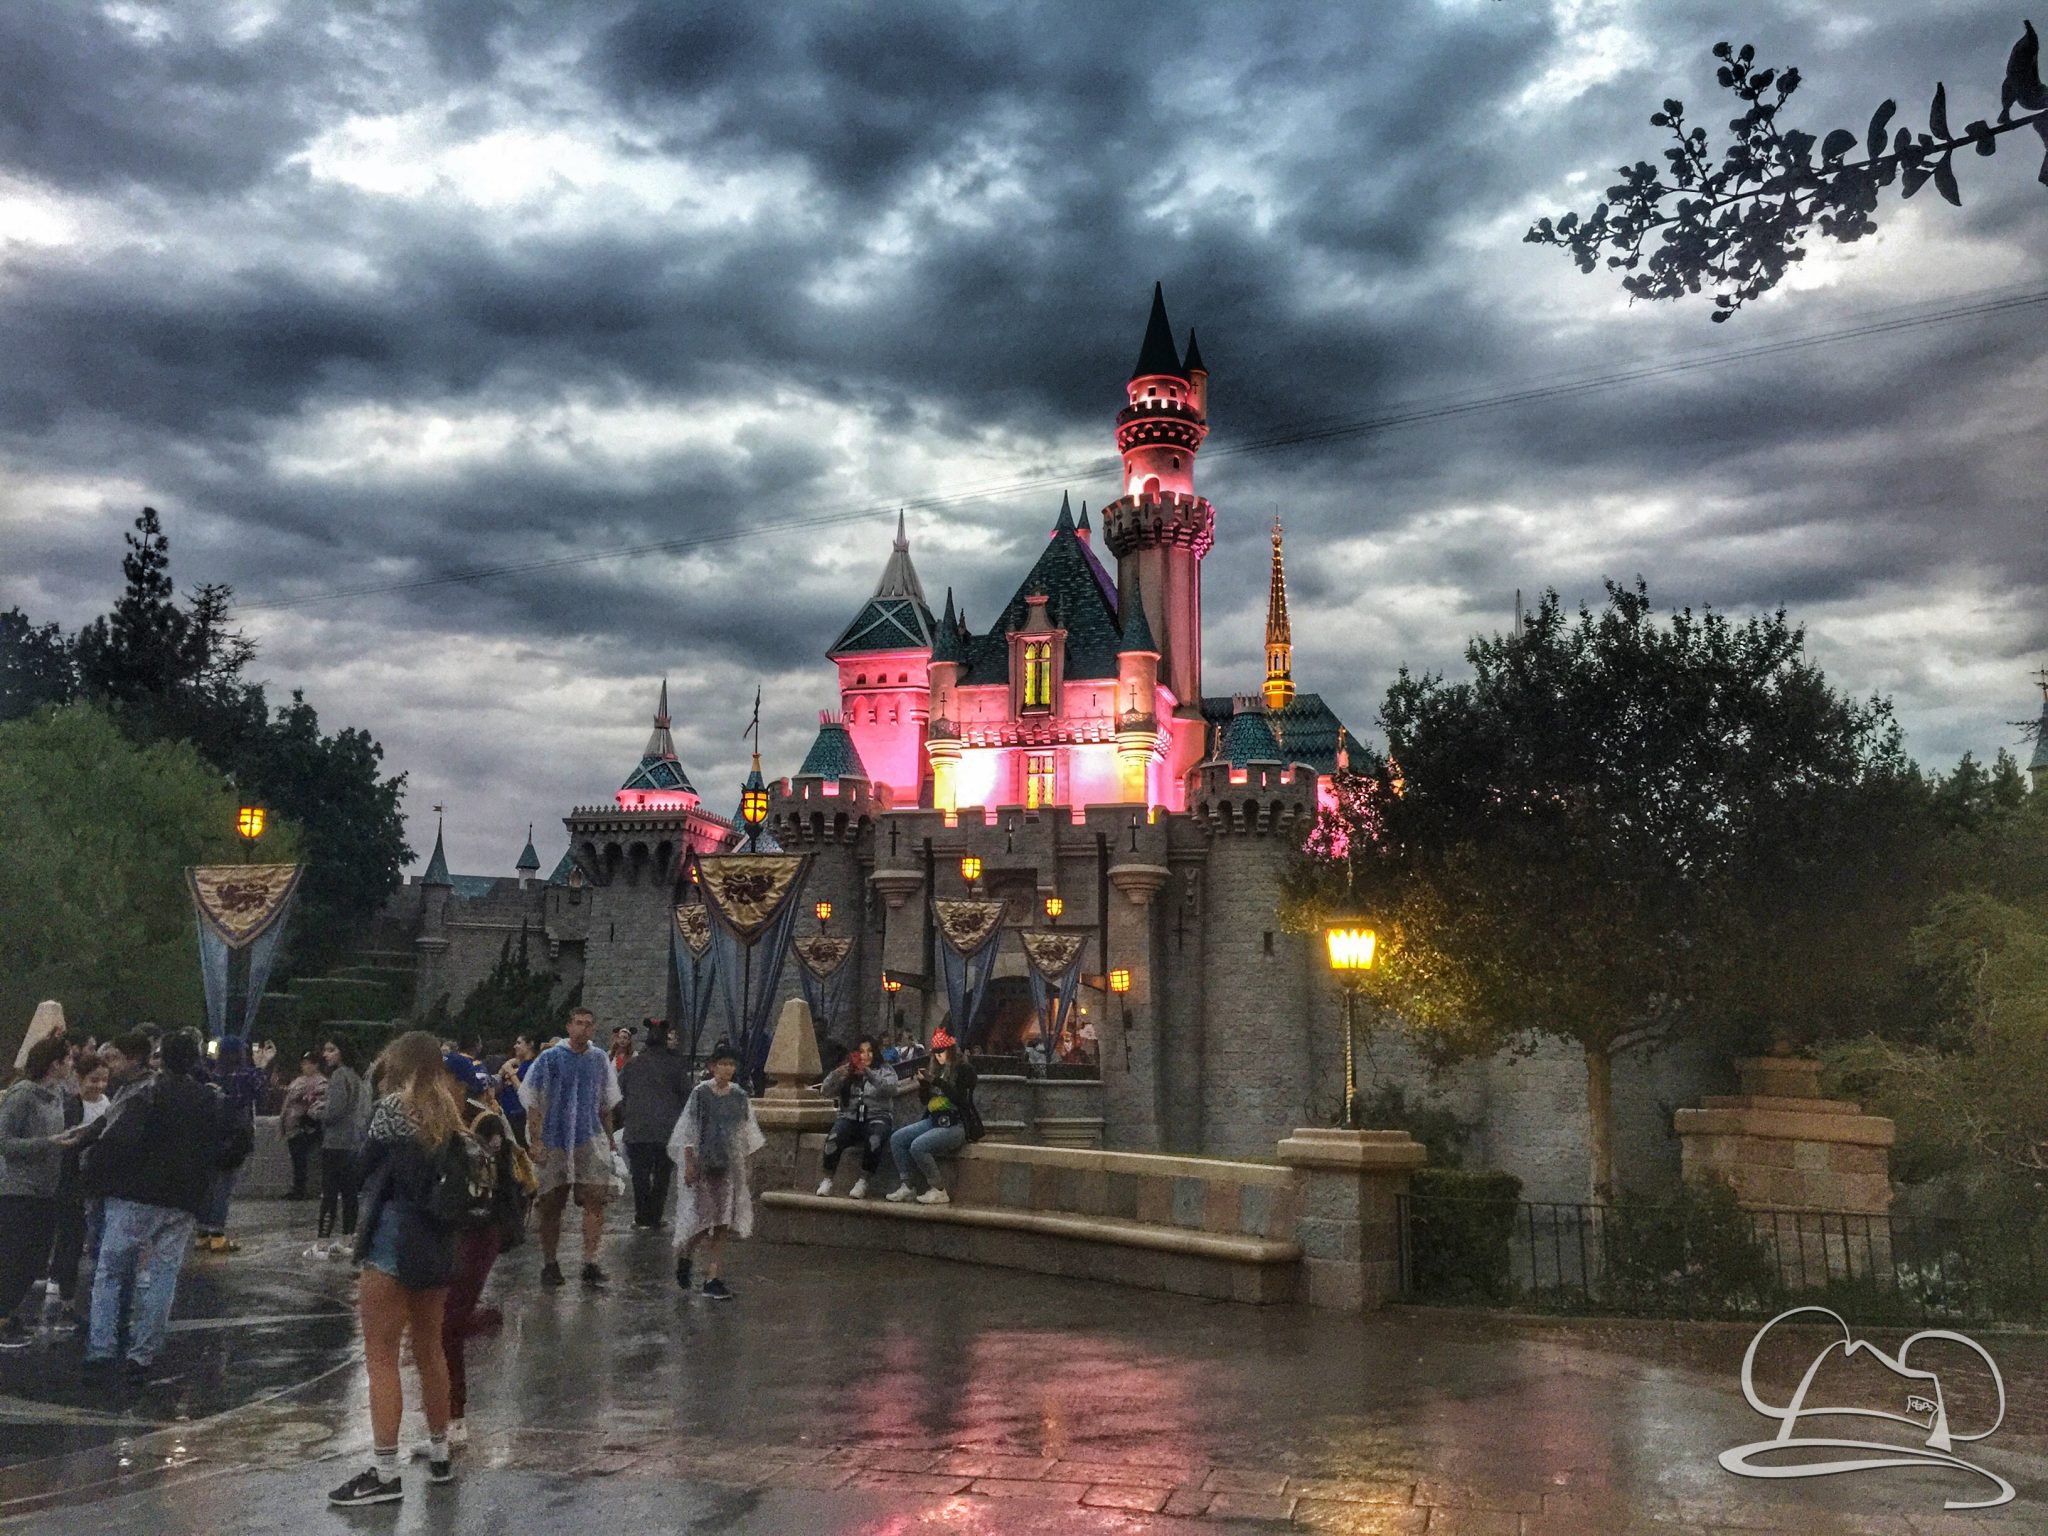 Tips for Enjoying Rainy Days at Disneyland